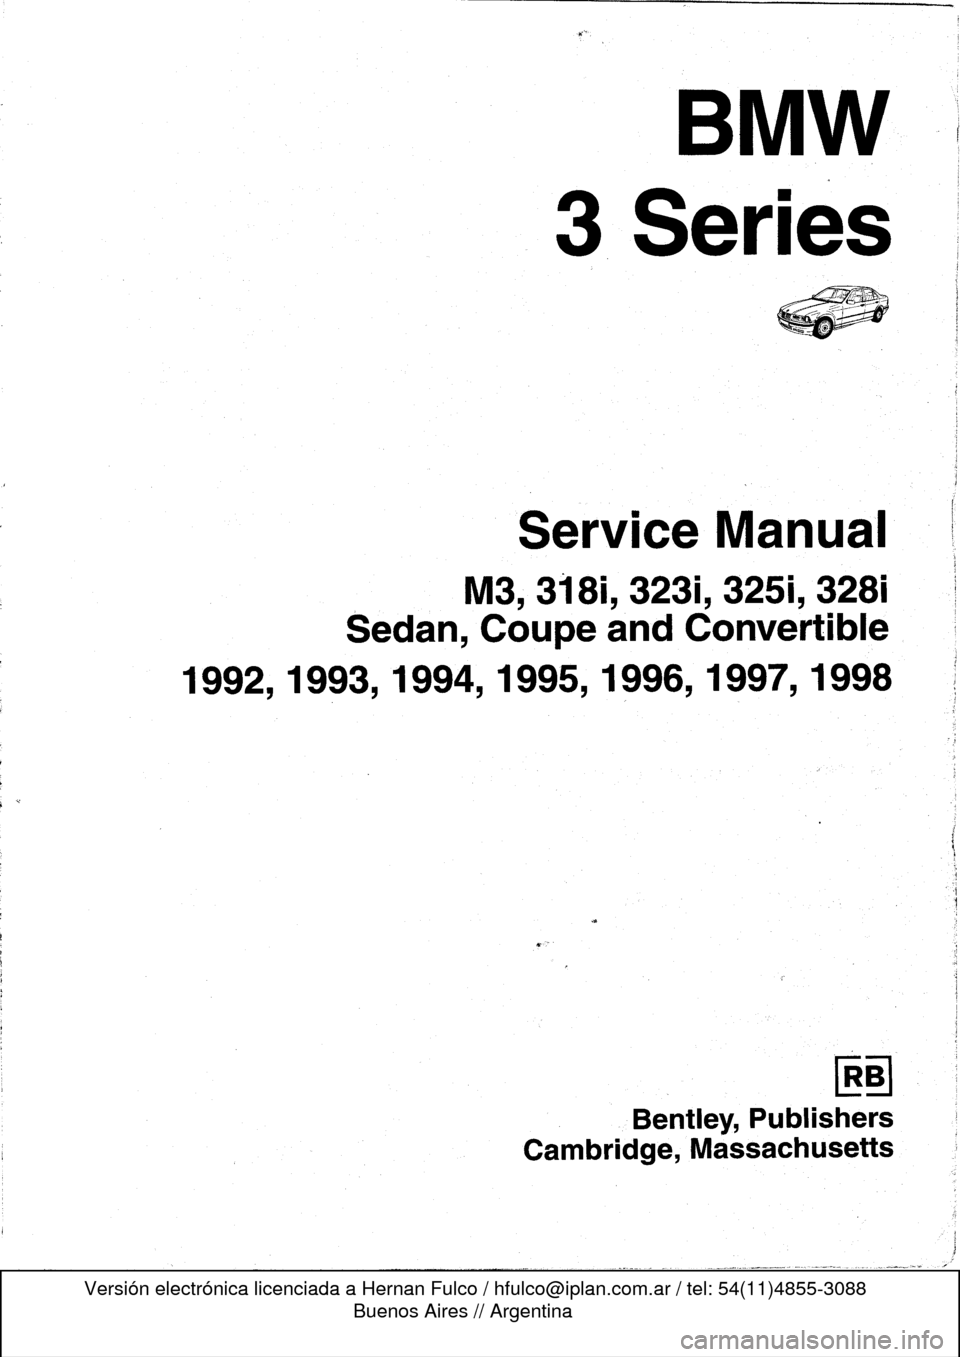 BMW 323i 1996 E36 Workshop Manual 
B
mw

3
Series

M3,
3181,3231,3251,
3281

Sedan,
Coupe
and
Convertible

1992,1993,1994,1995,
1996,1997,
1998

Bentley,
Publishers

Cambridge,
Massachusetts 